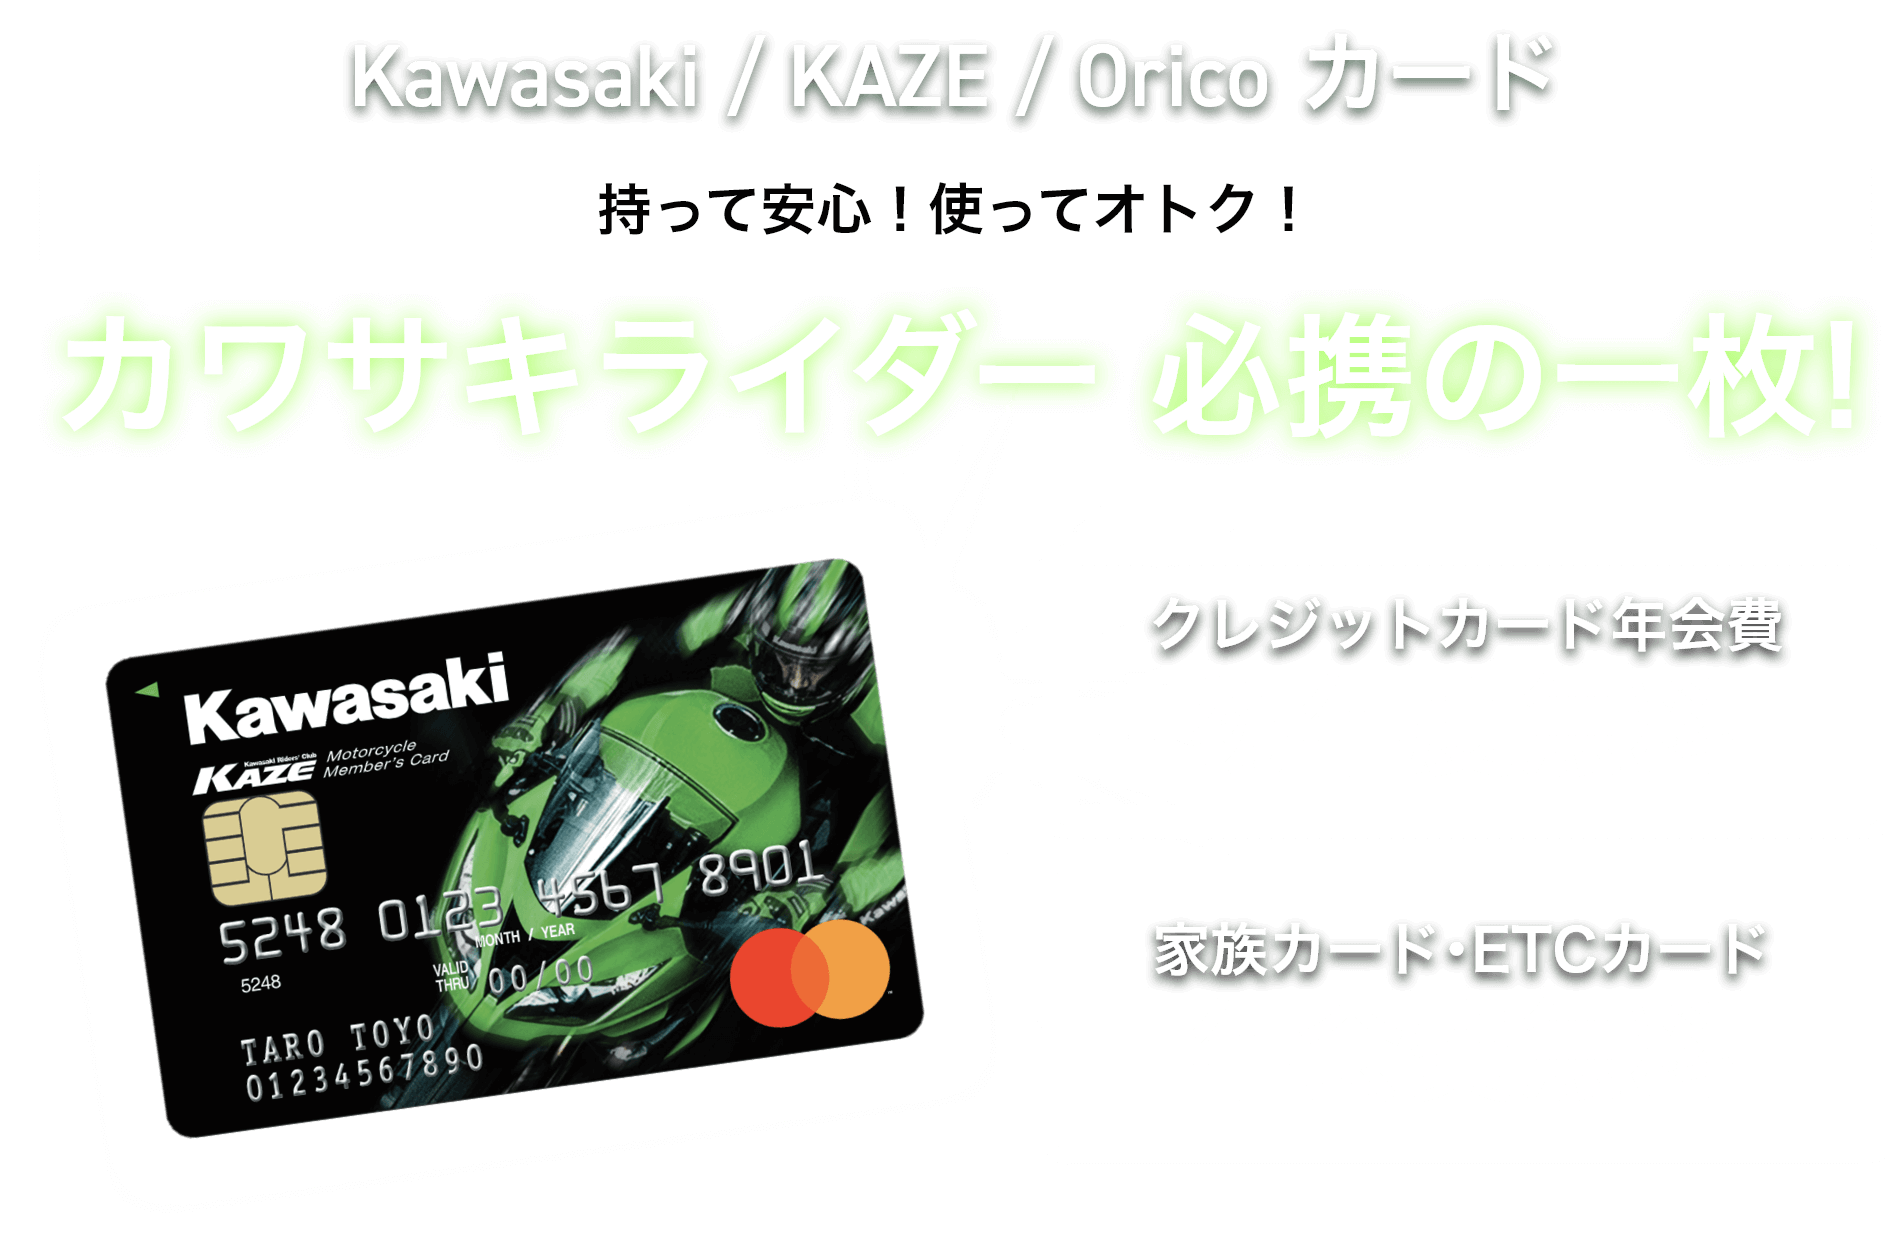 Kawasaki/KAZE/Oricoカード 持って安心！使っておトク！カワサキライダー必携の一枚！クレジットカード年会費初年度無料 家族カード・ETCカード年会費無料